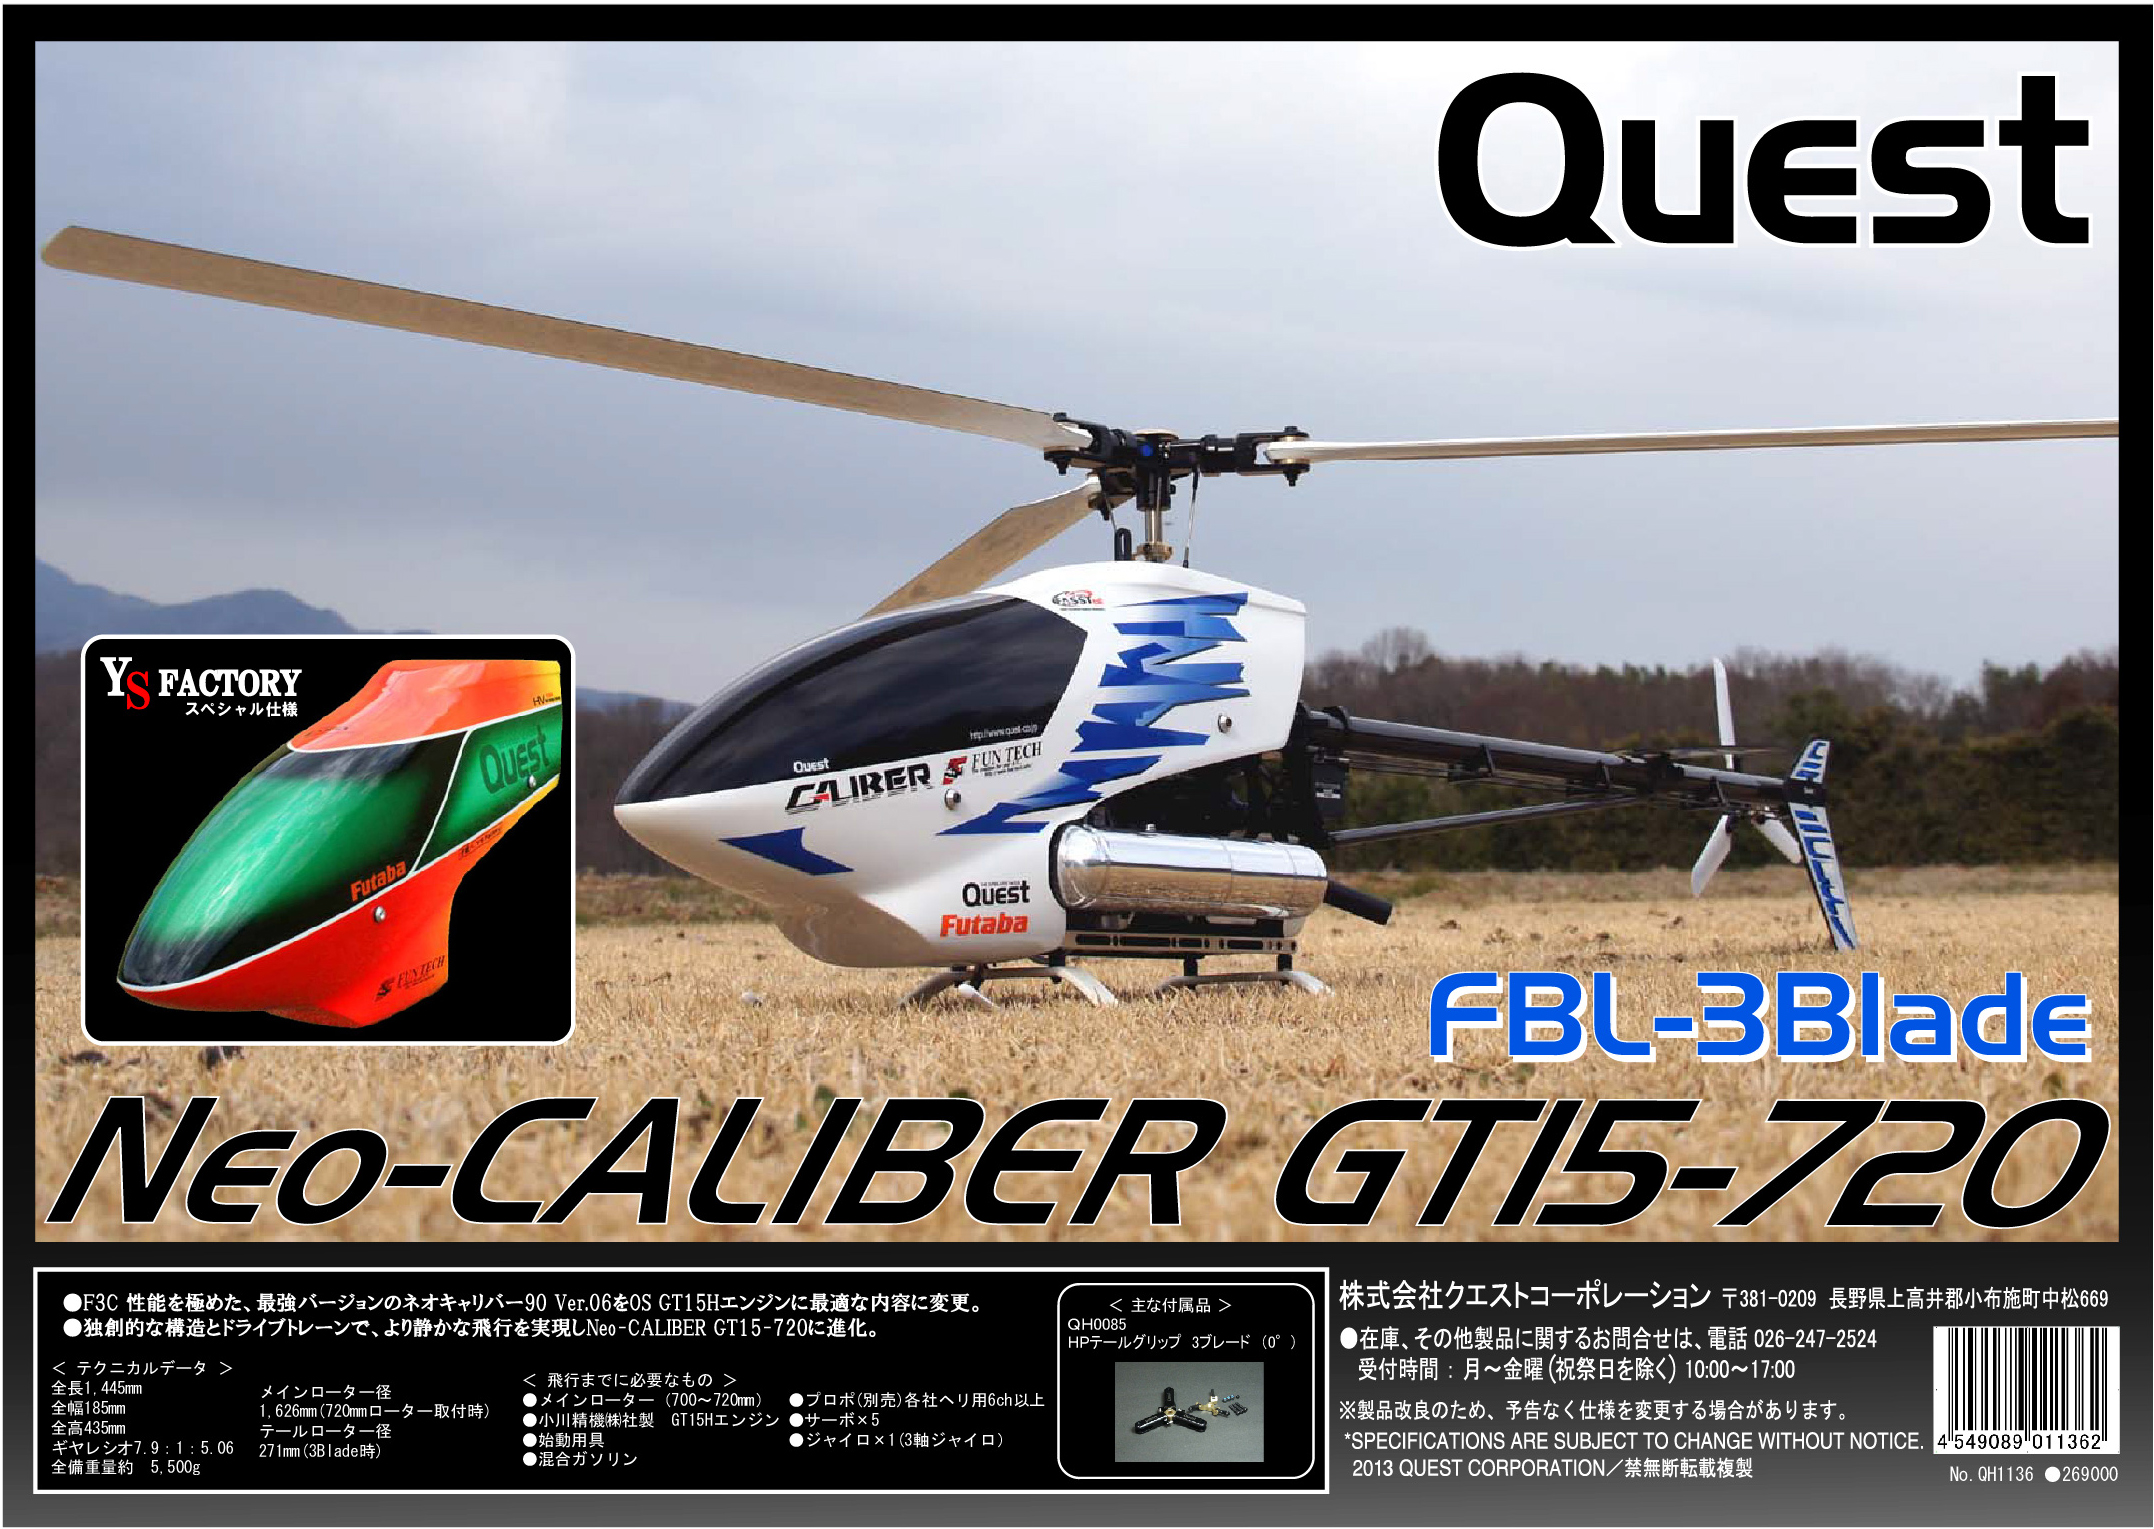 Neo-Caliber GT-15-720 FBL 3blade Ysペイント仕様